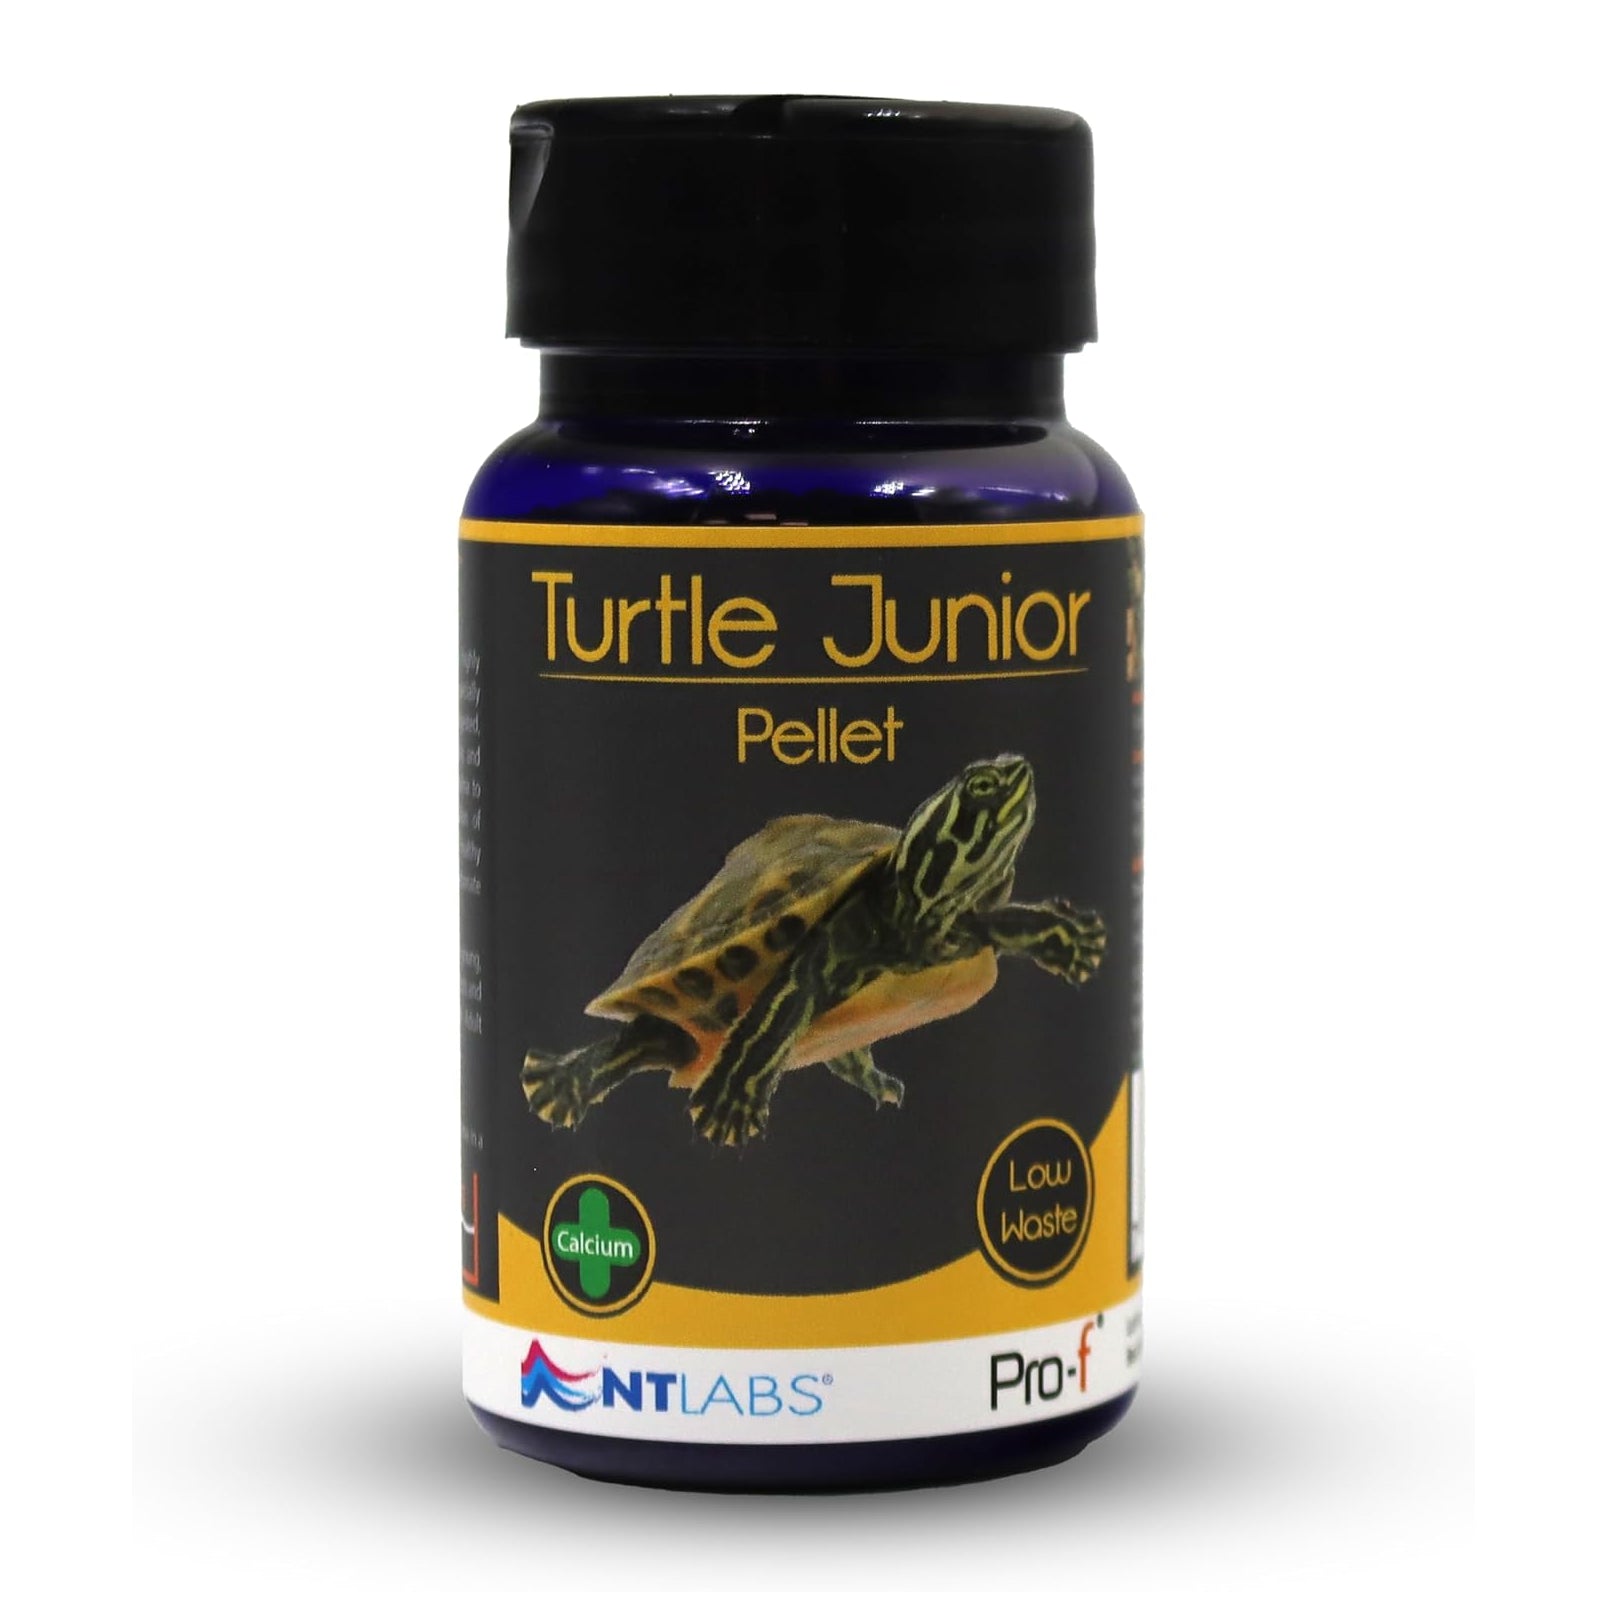 NT Labs Pro-F Turtle Pellets 2 Sizes